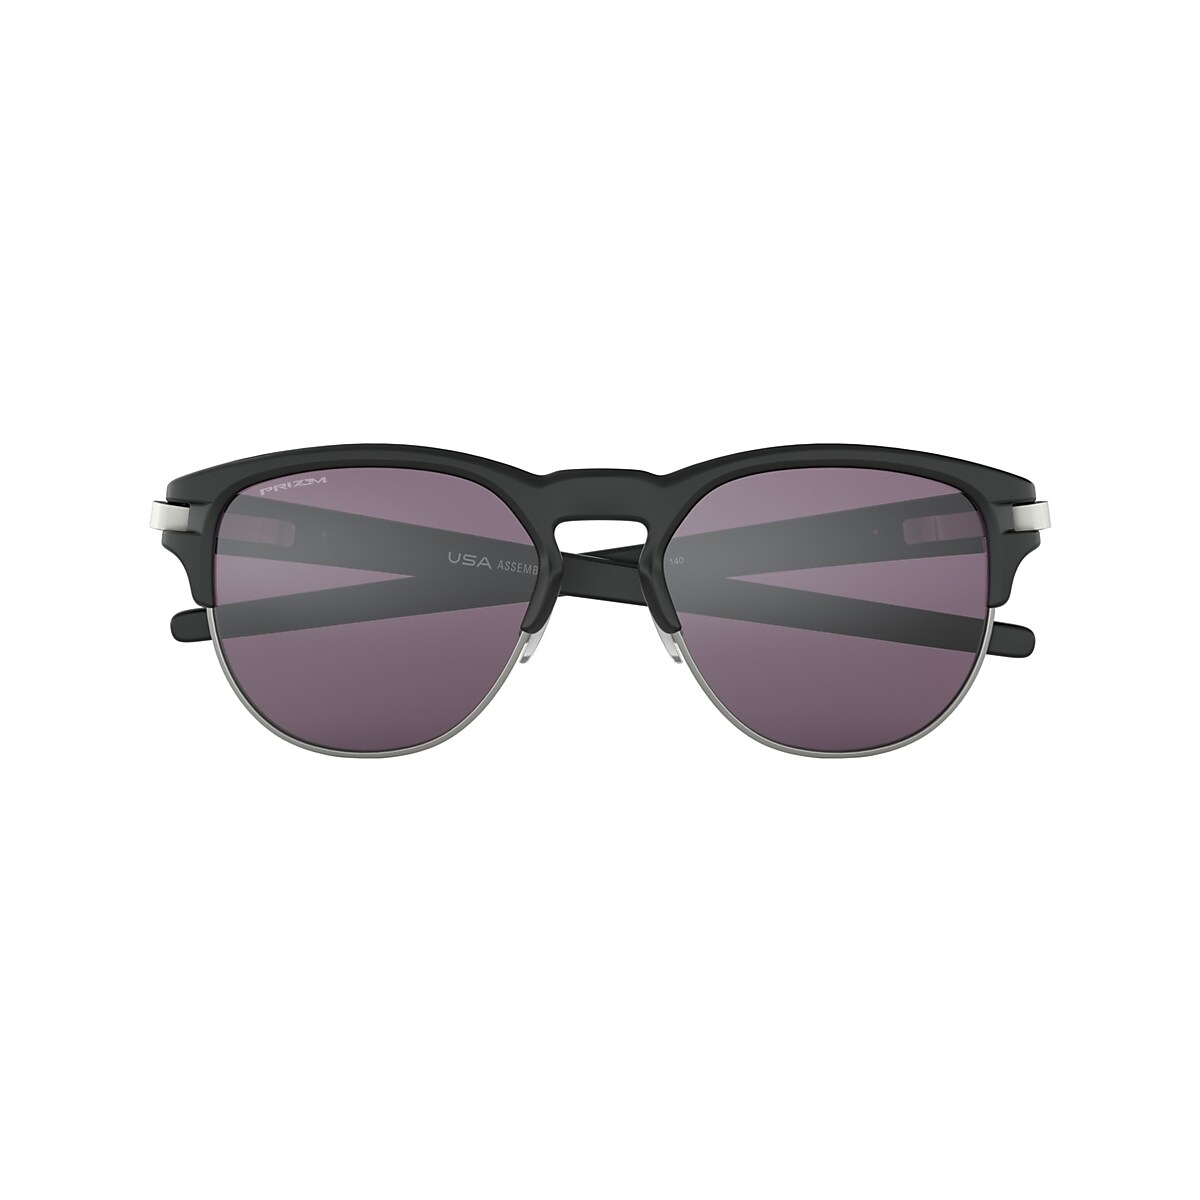 Latch™ Key L Prizm Grey Lenses, Matte Black Frame Sunglasses 